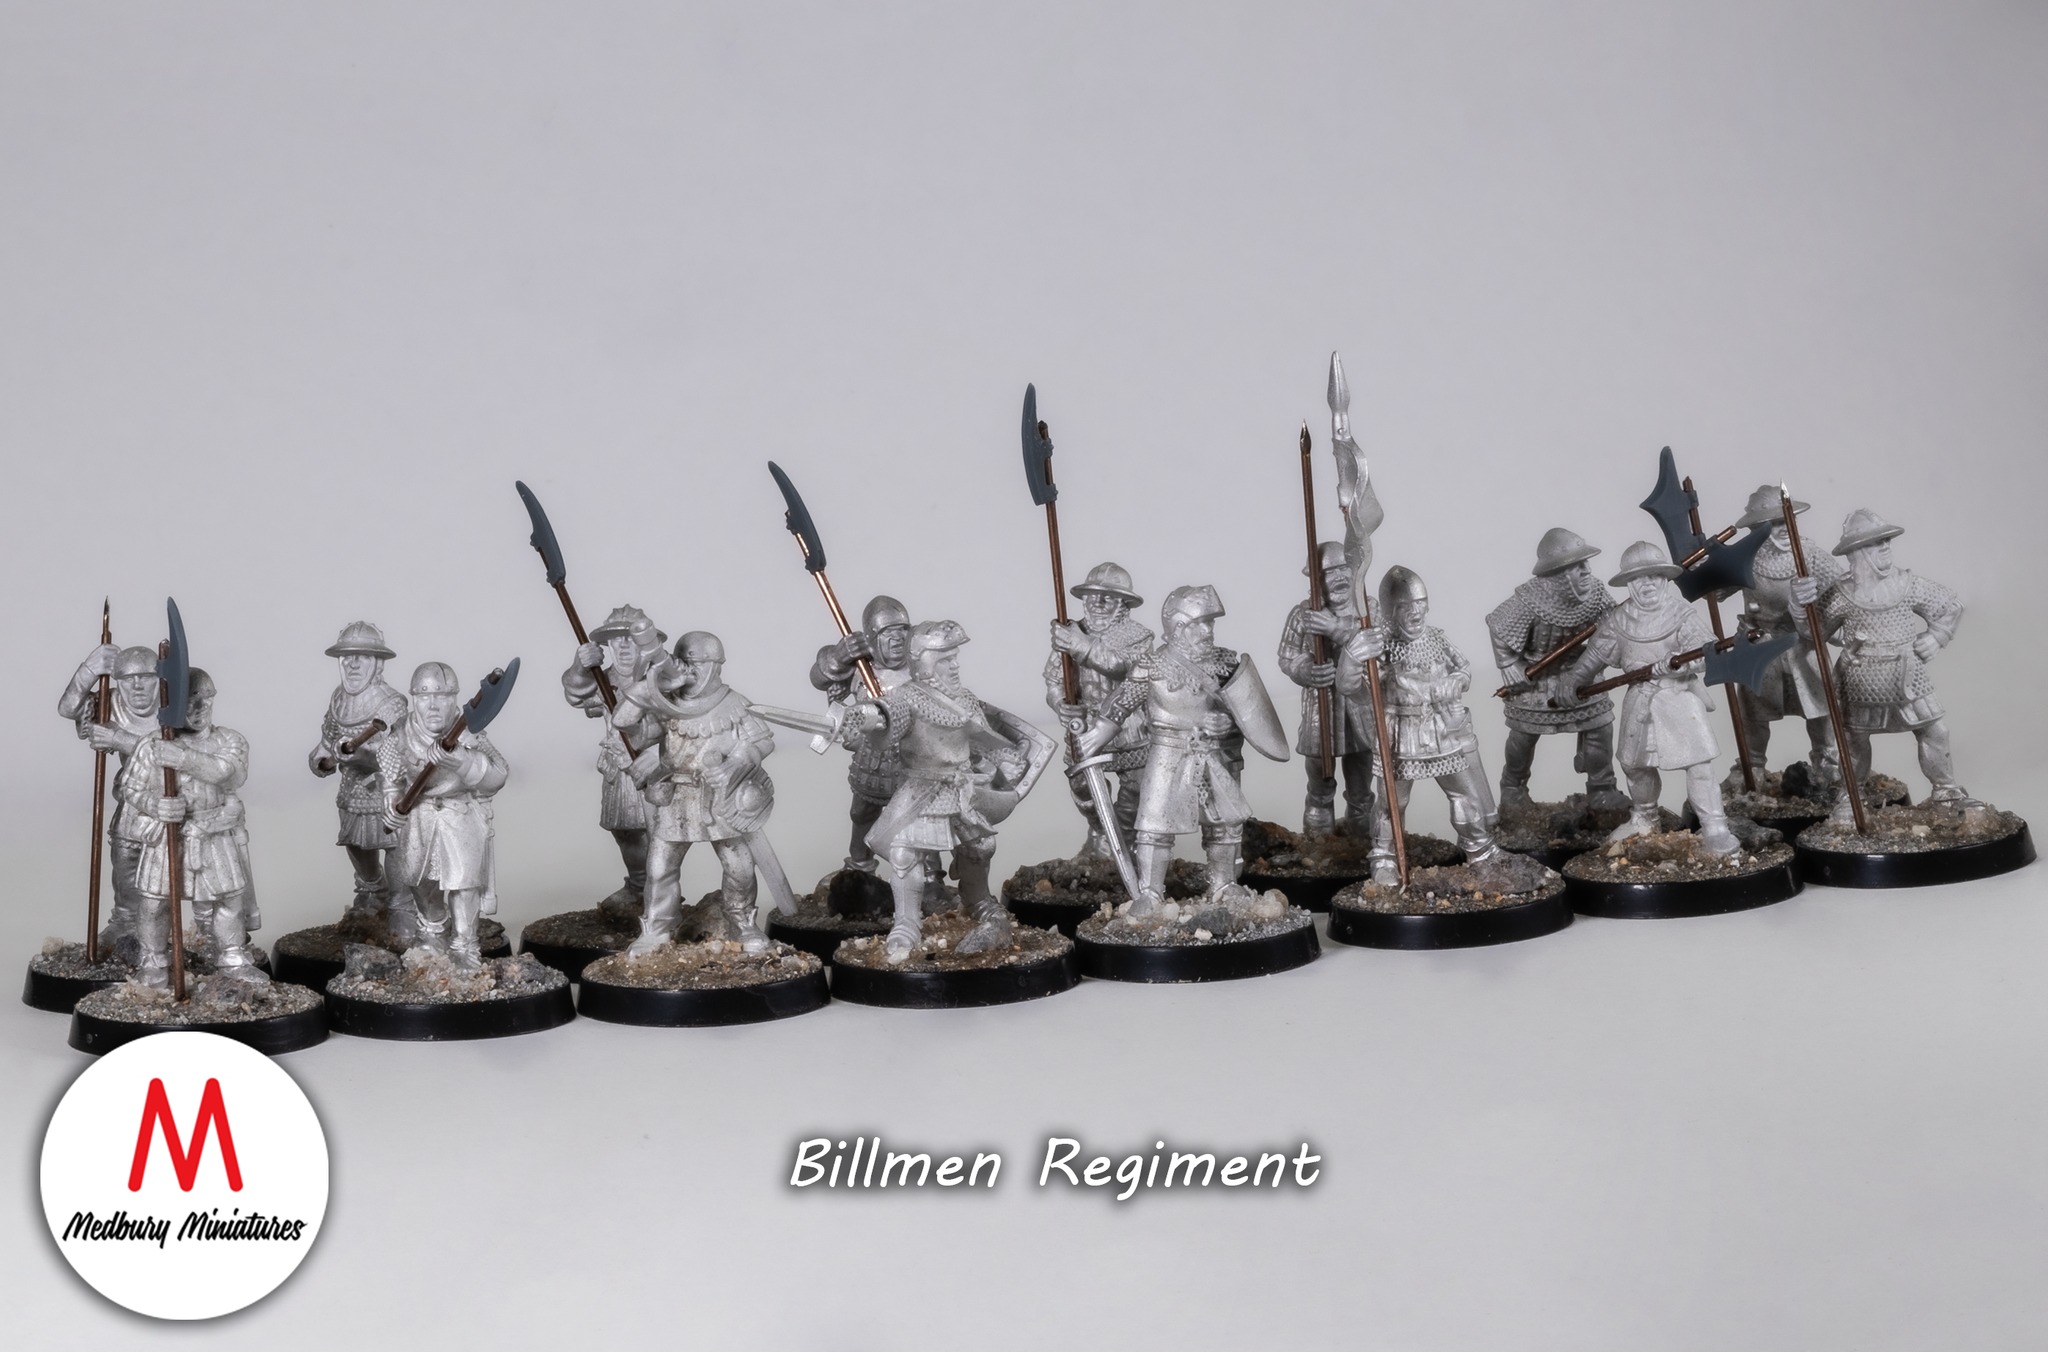 Billmen Regiment - Medbury Miniatures